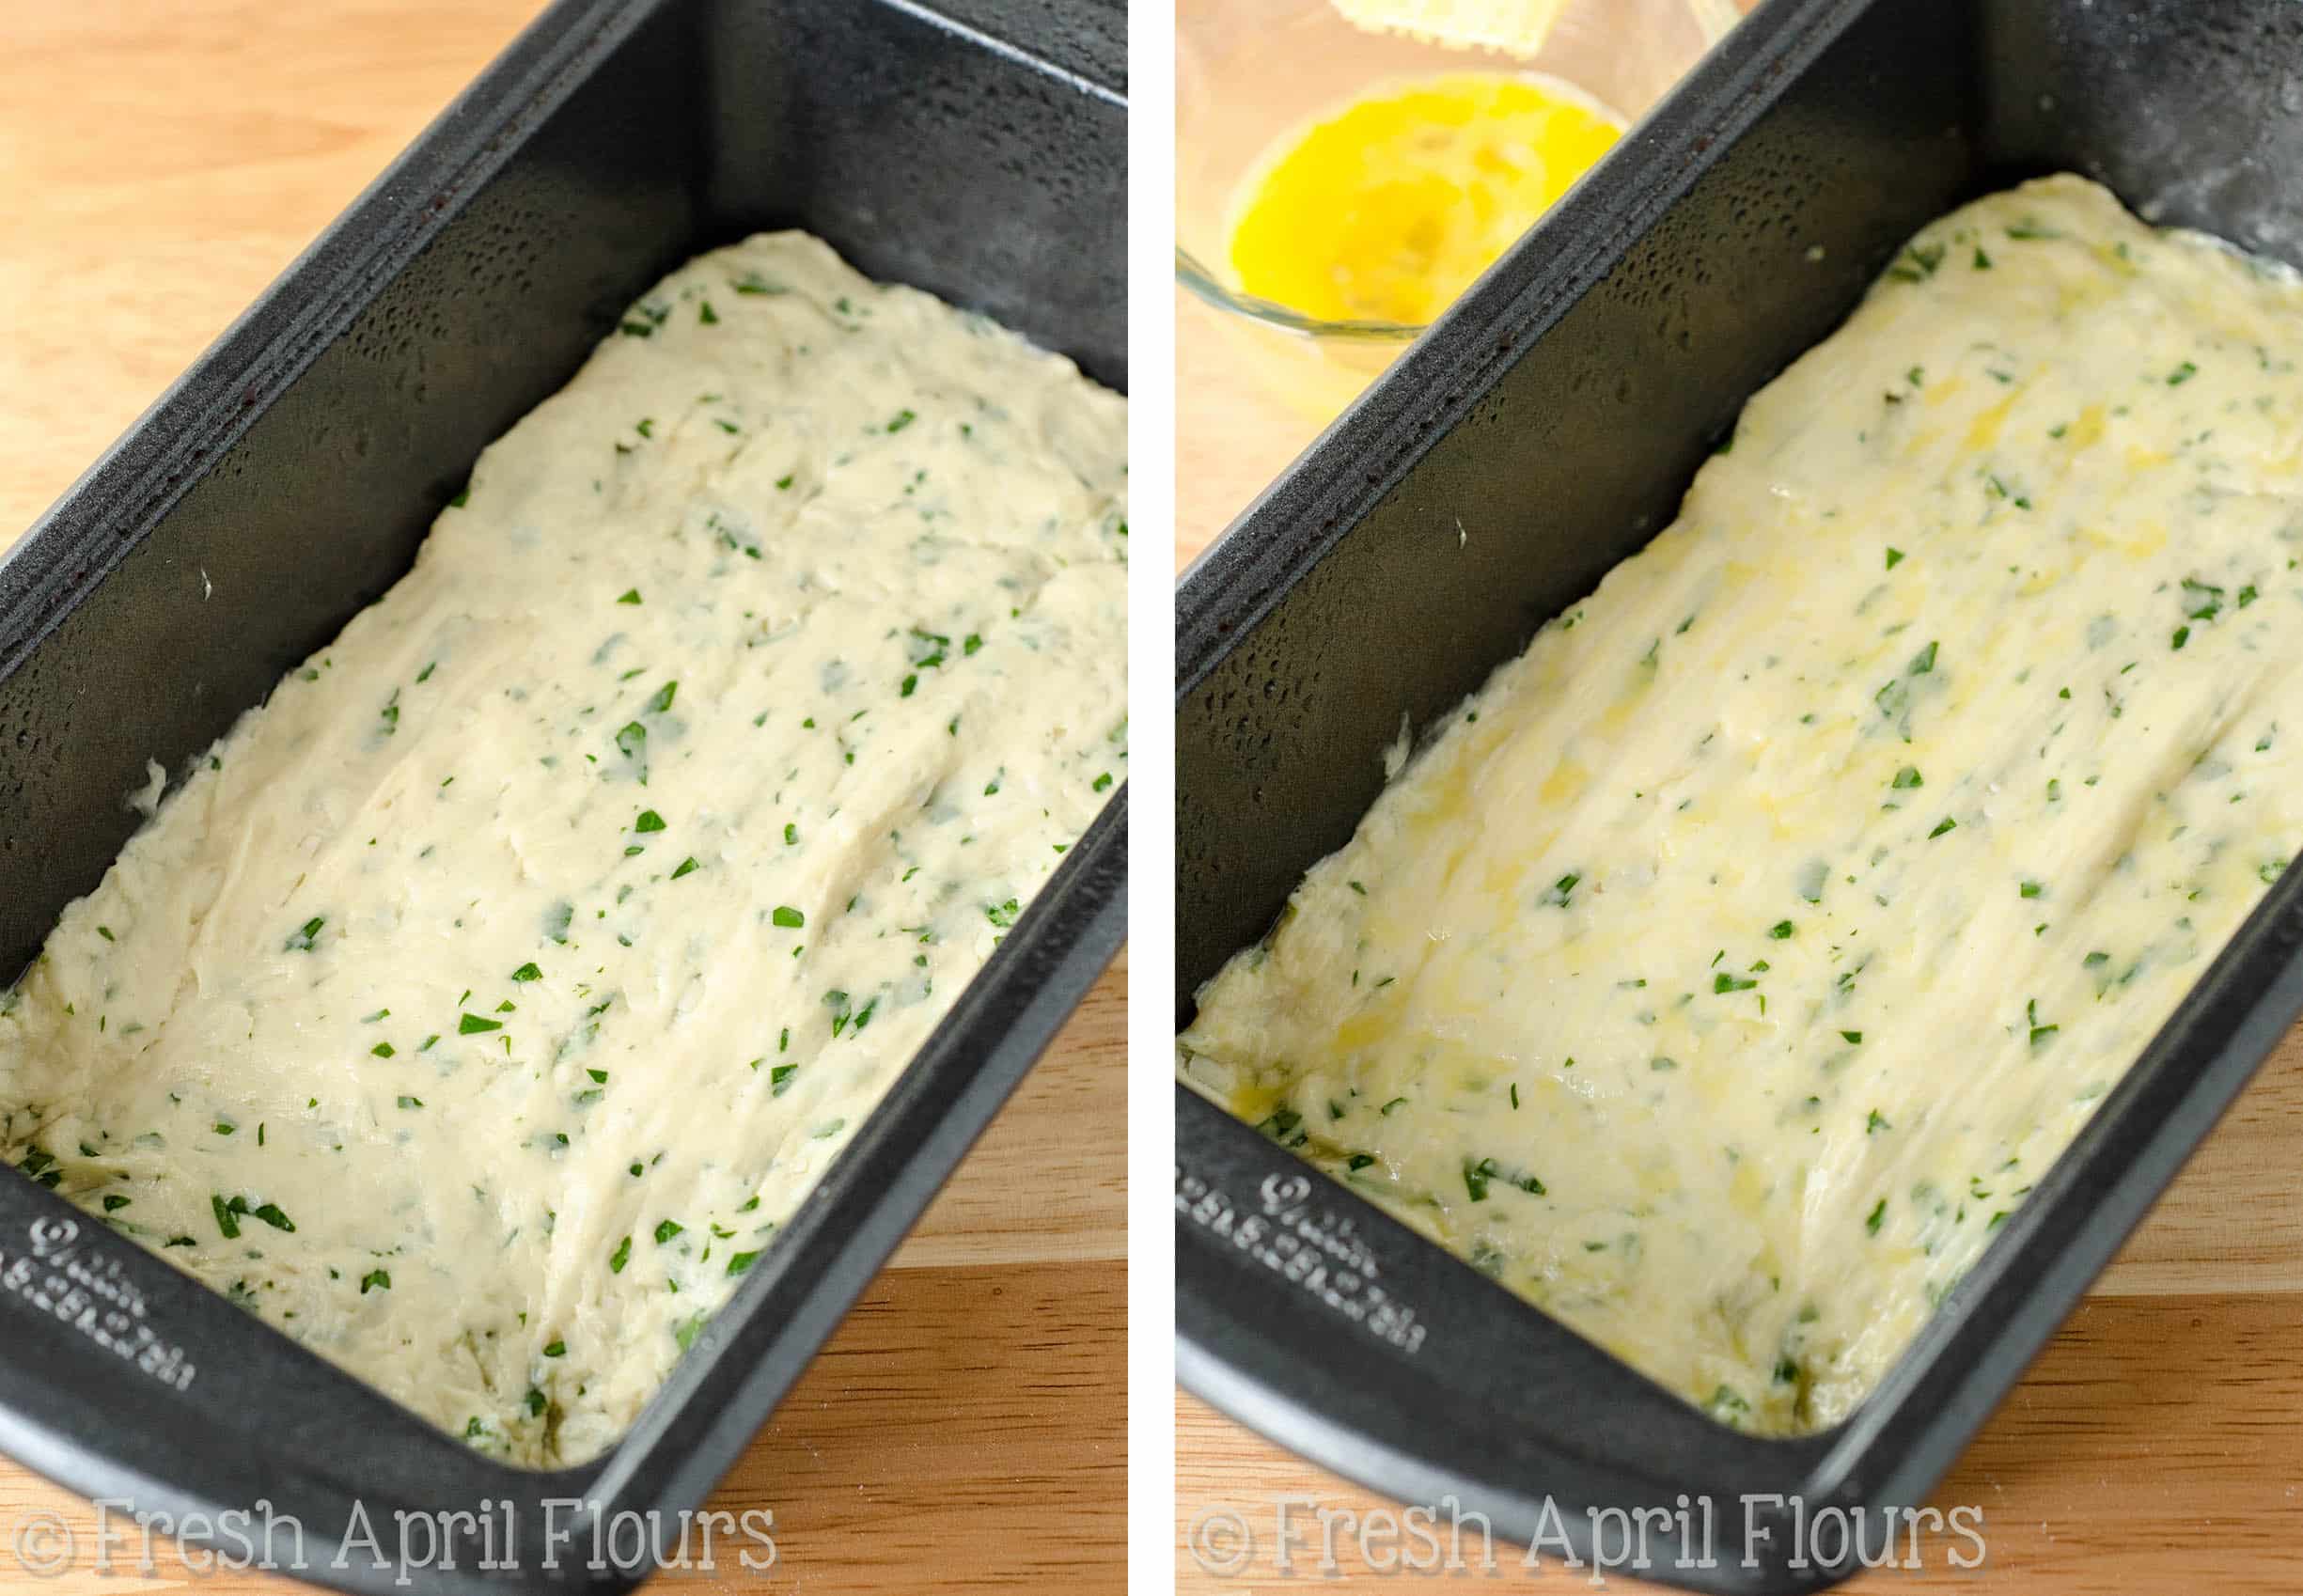 Parmesan parsley bread dough in a baking pan.